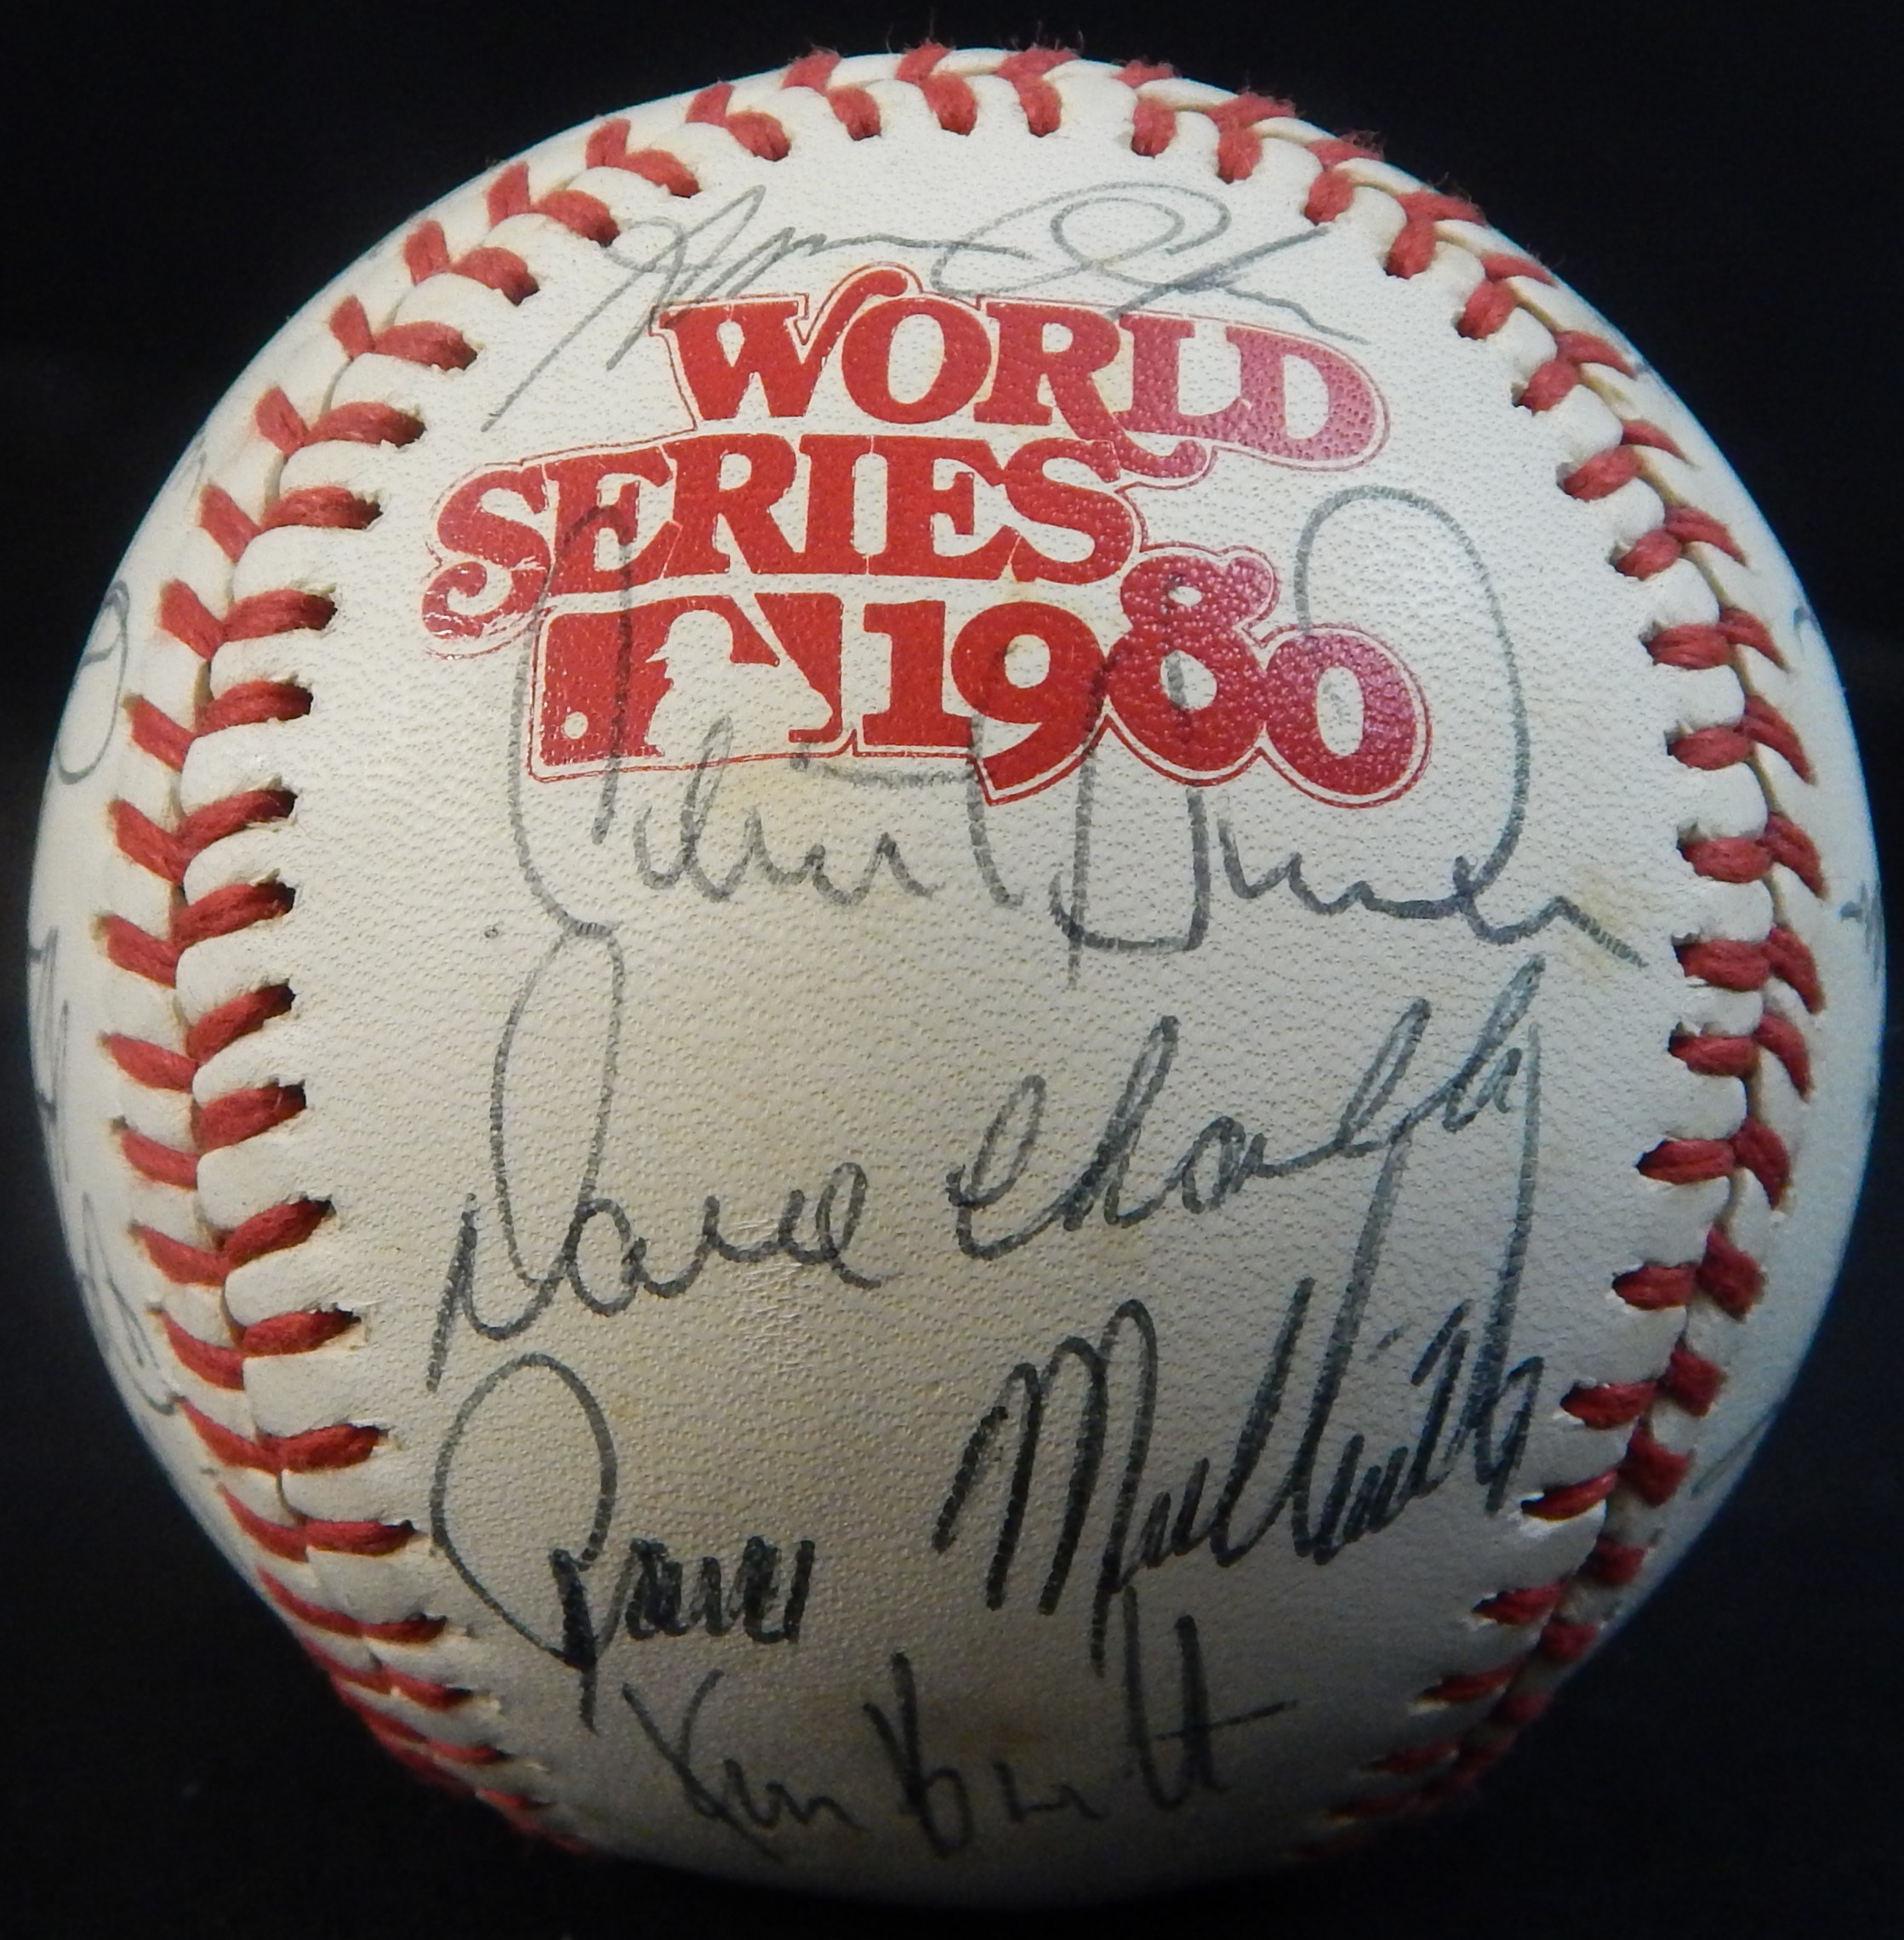 Baseball Autographs - 1980s Kansas City Royals Team Signed Baseball with Brett